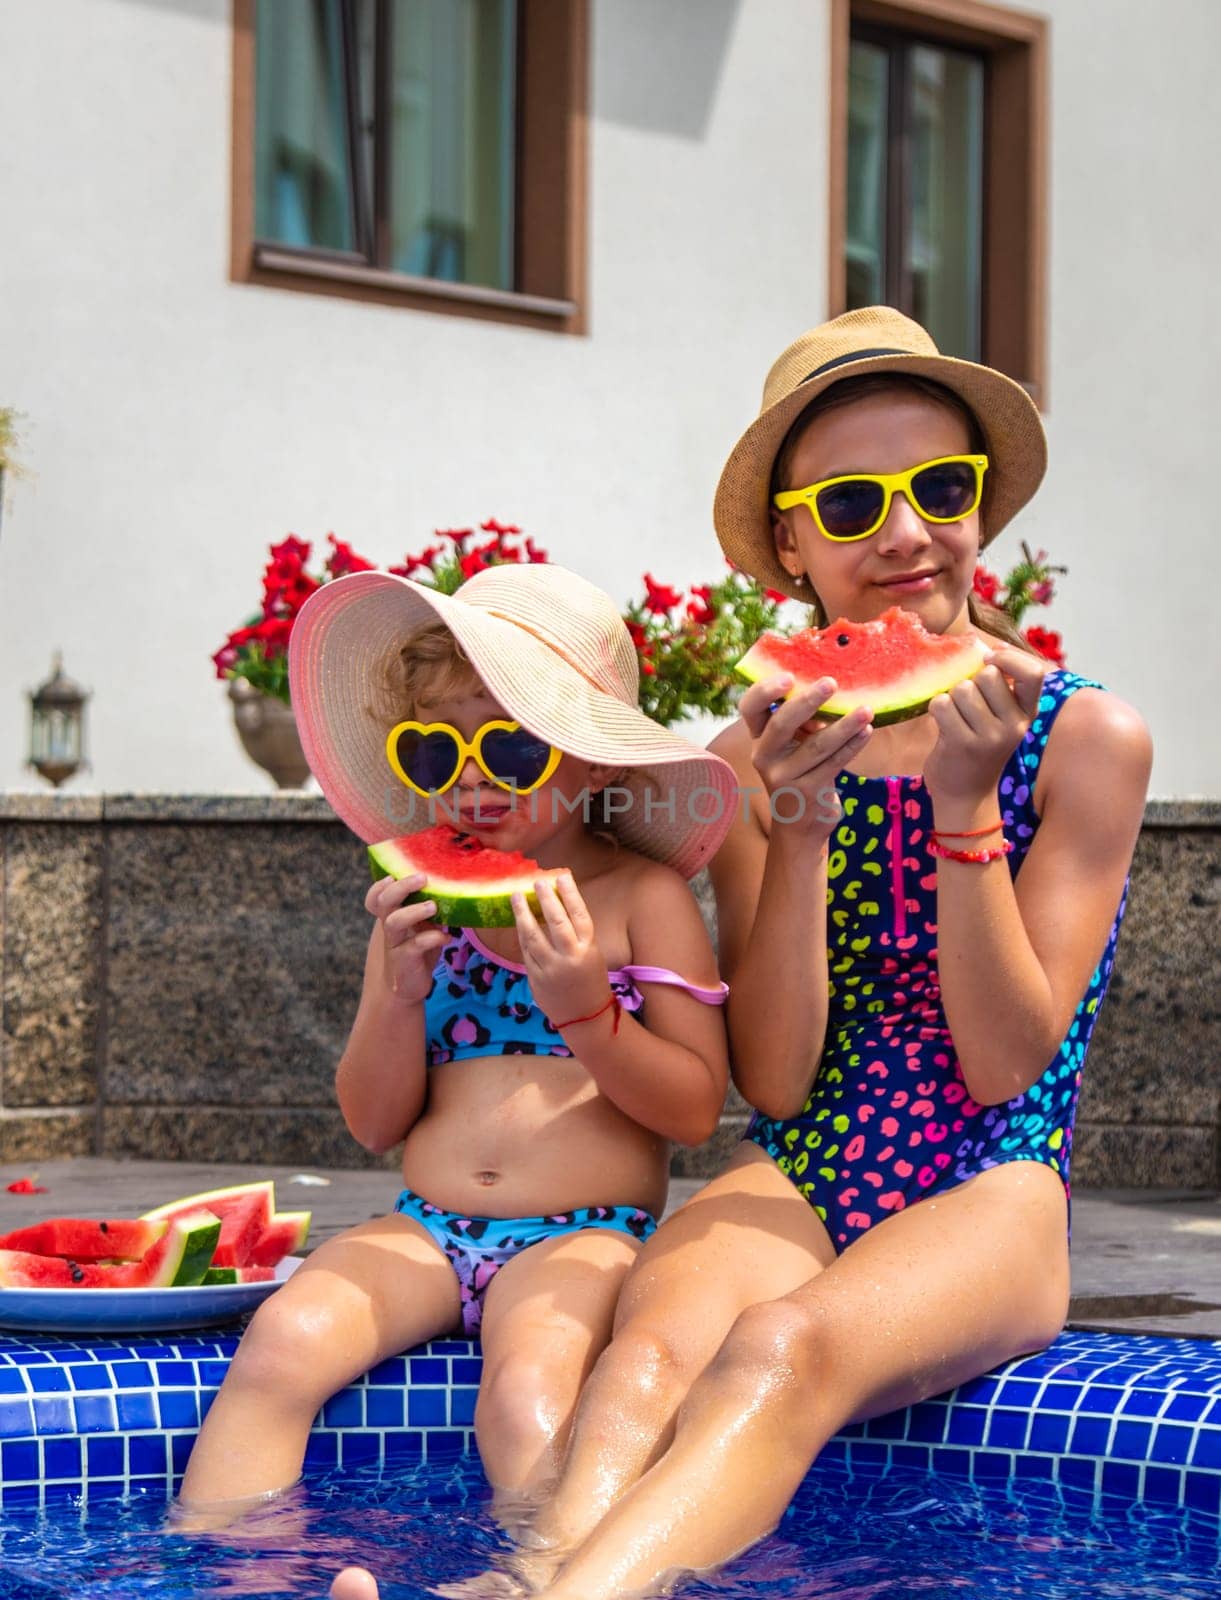 Children eat watermelon near the pool. Selective focus. Food.